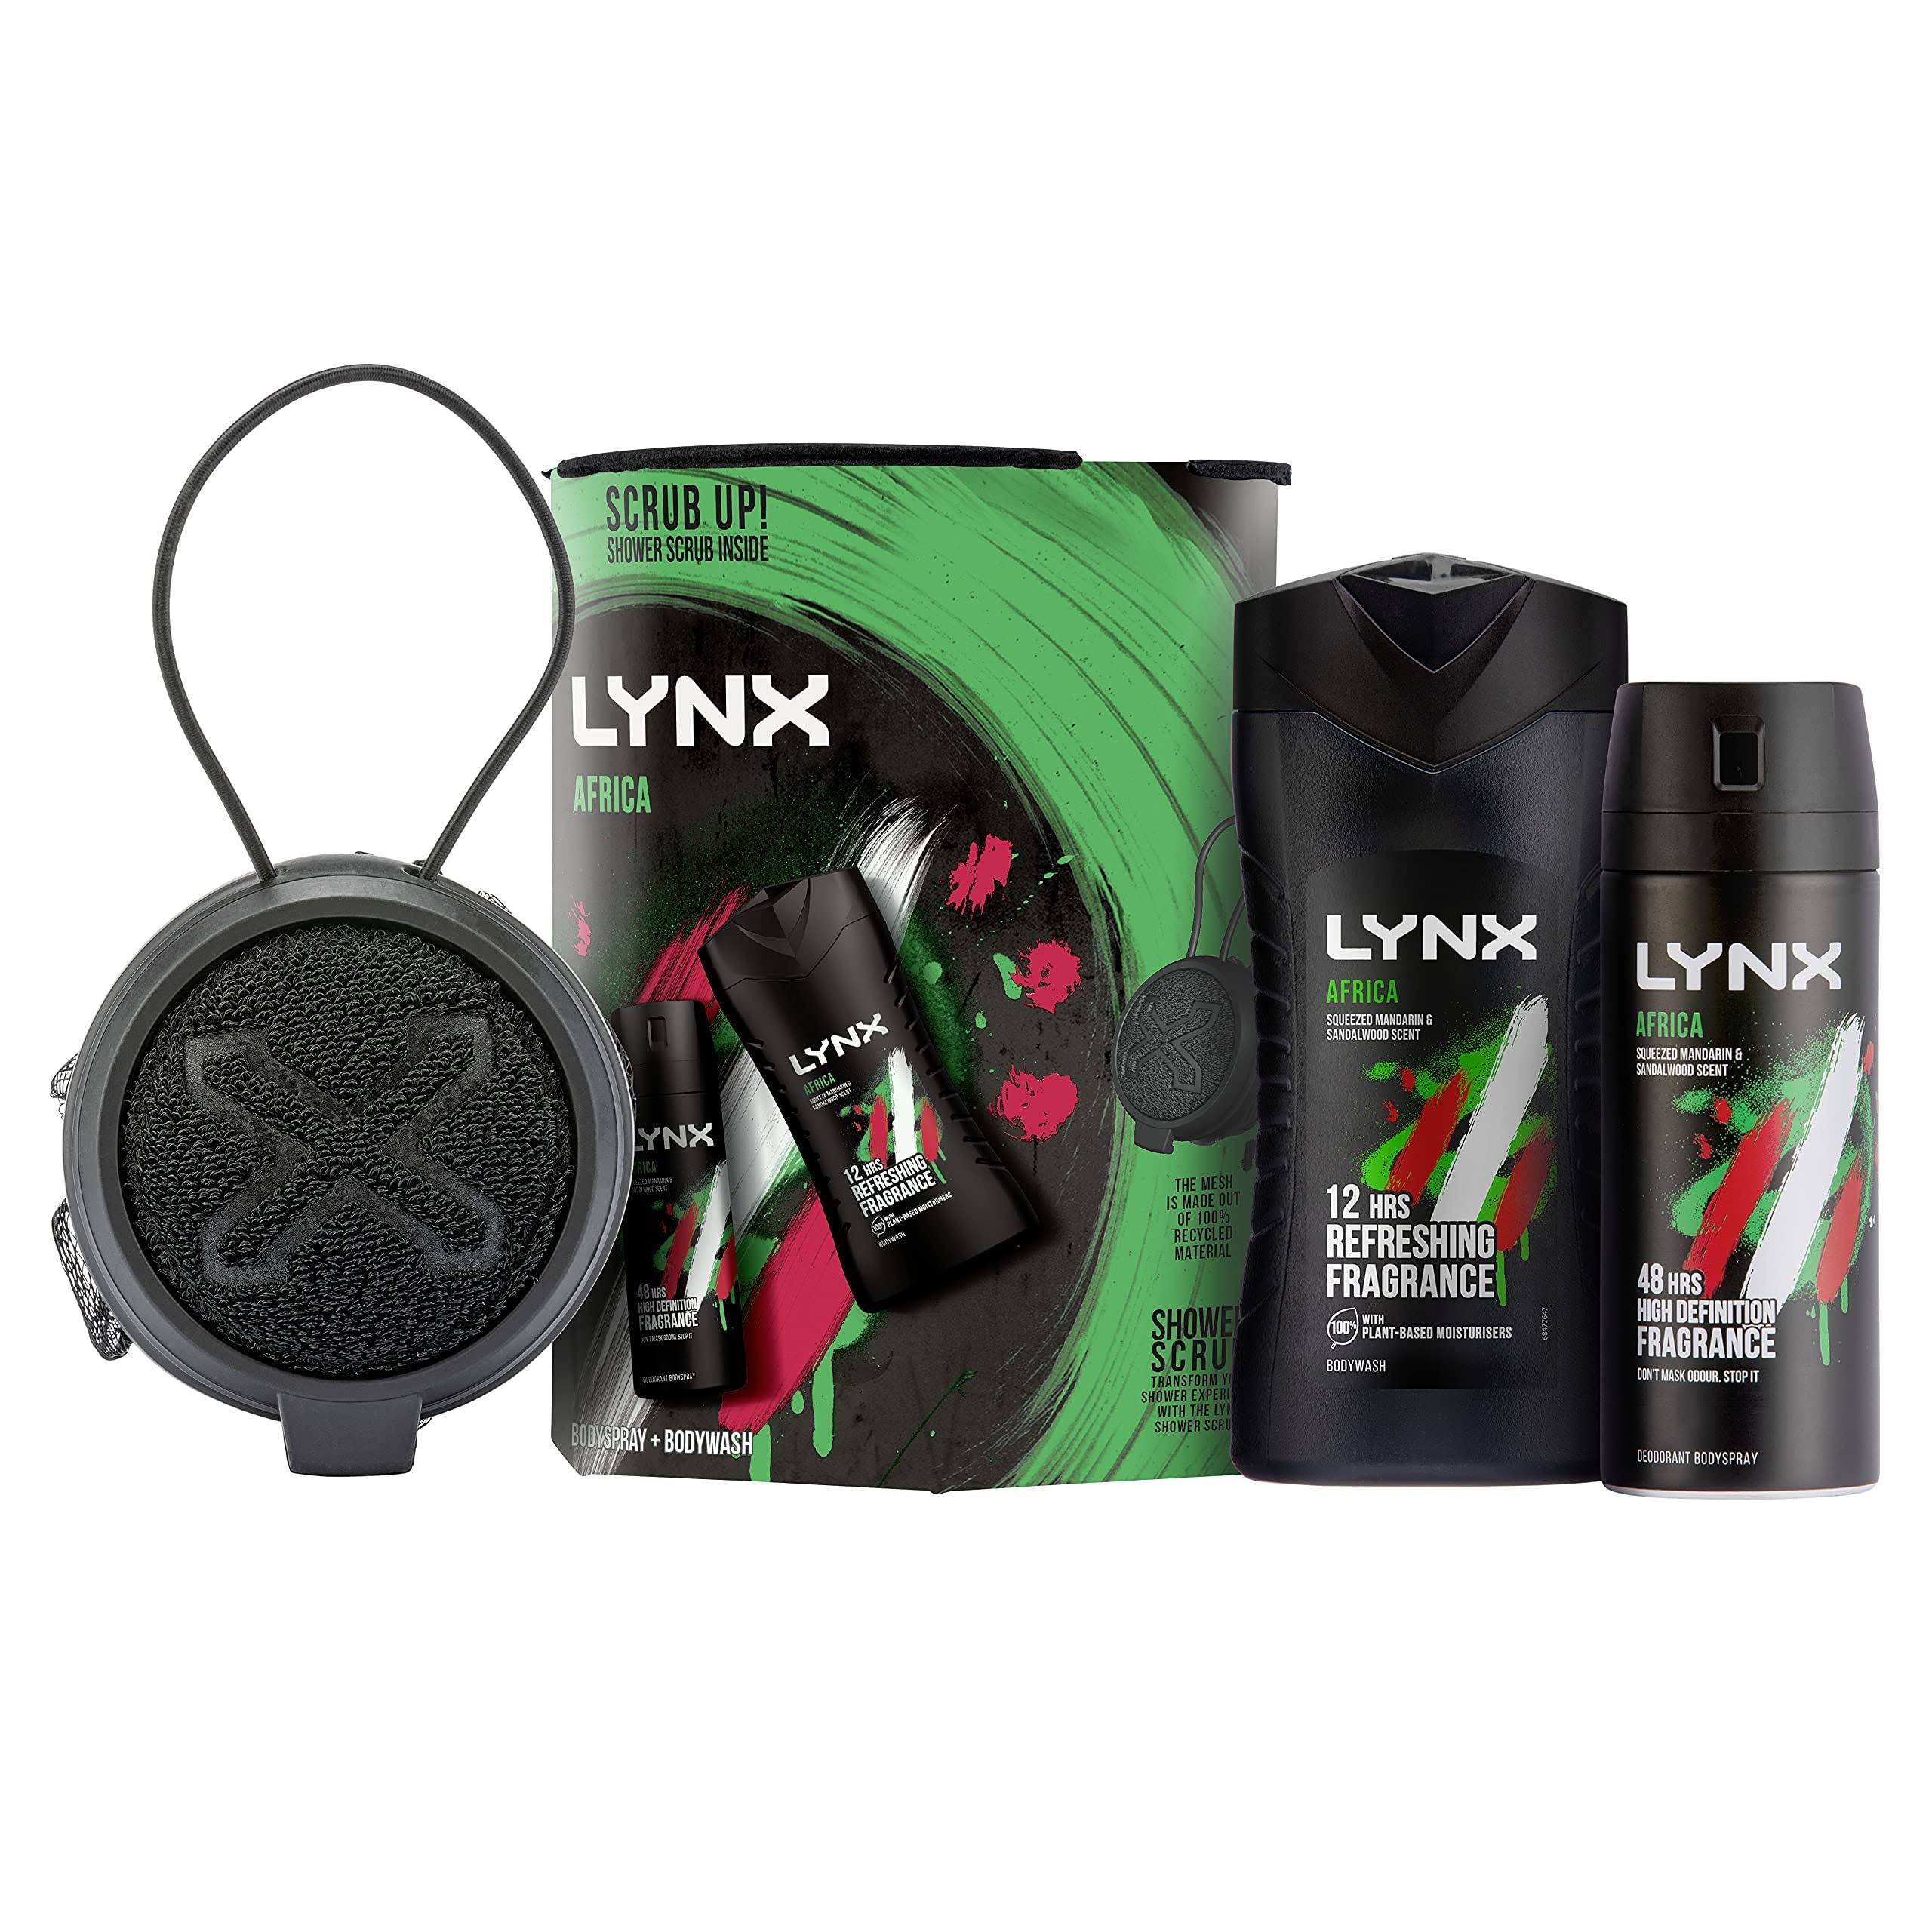 Lynx Africa Duo & Body Scrub Gift Set